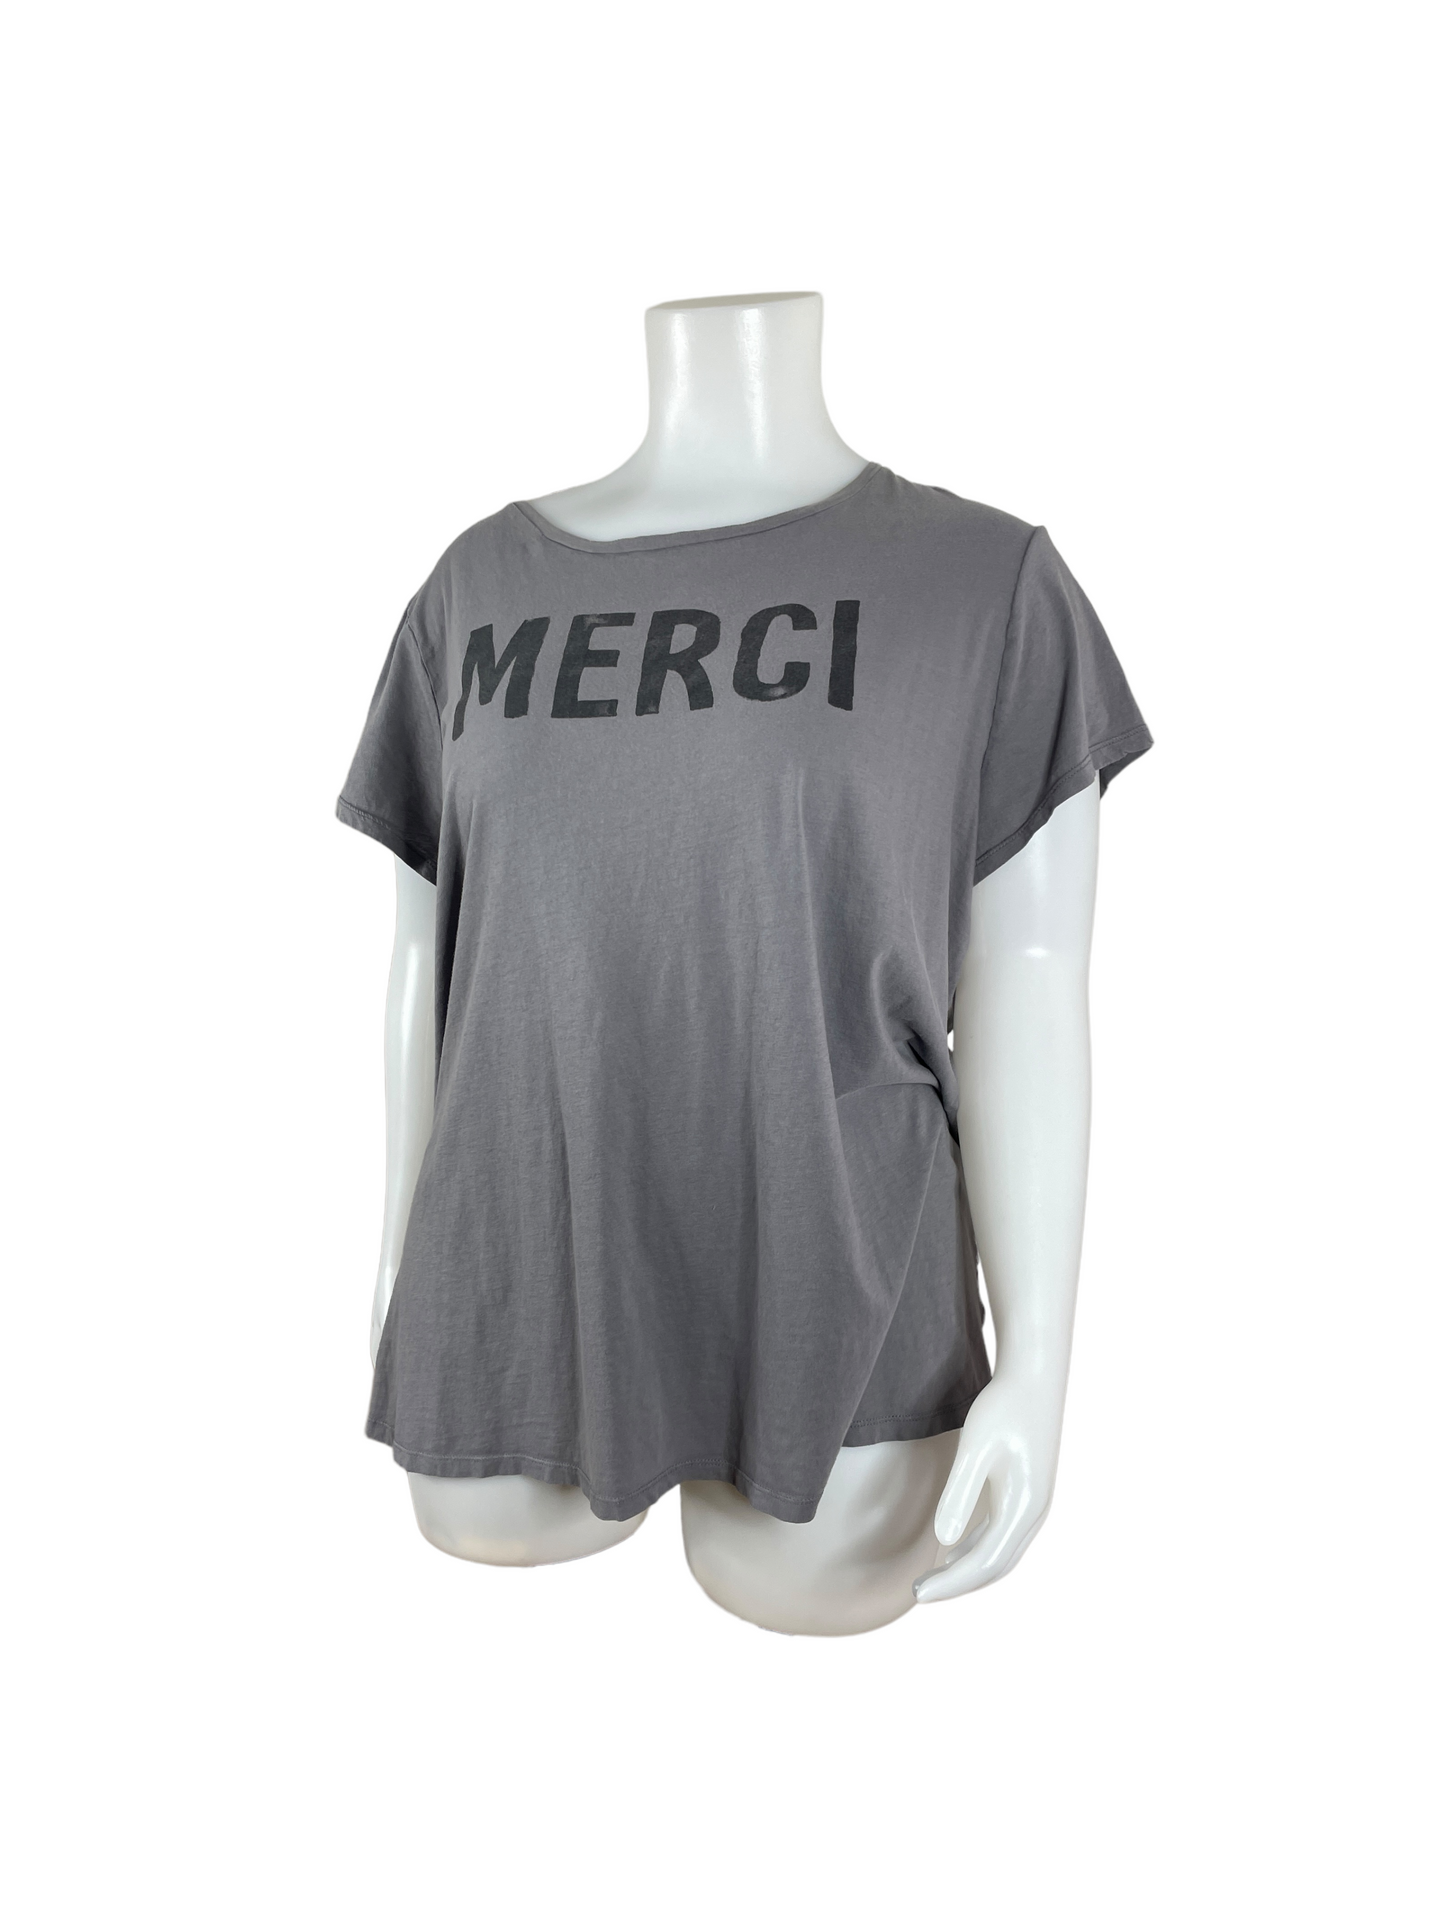 "Old Navy" Graphic Grey T-shirt 'MERCI' (4X)